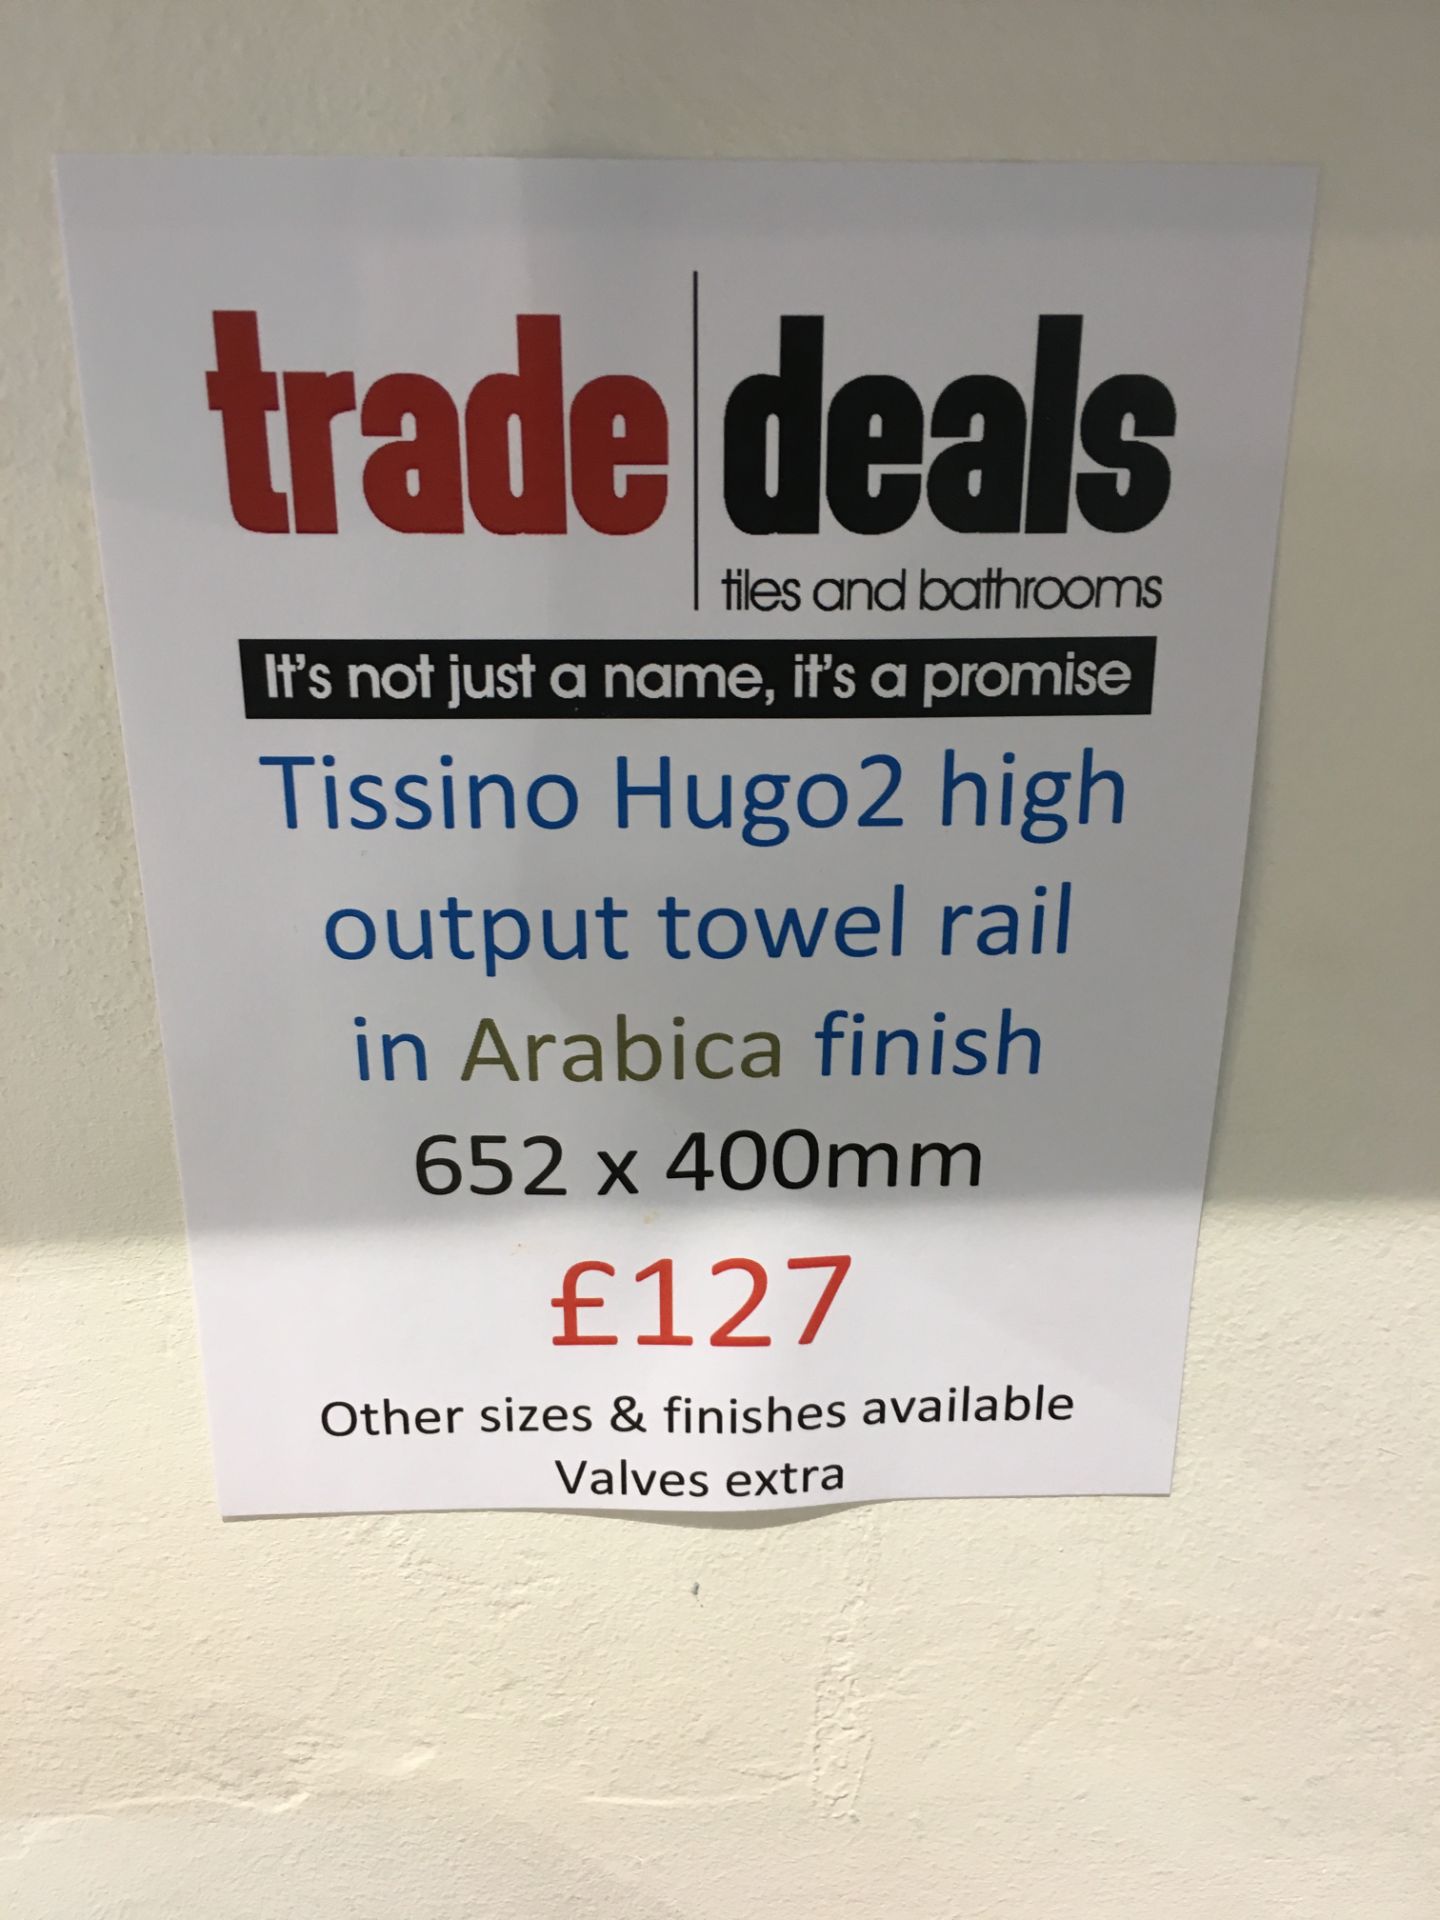 Tissino Hugo 2 high output towel radiator w/ arabica finish (652x400mm) RRP - £127 - Image 2 of 2